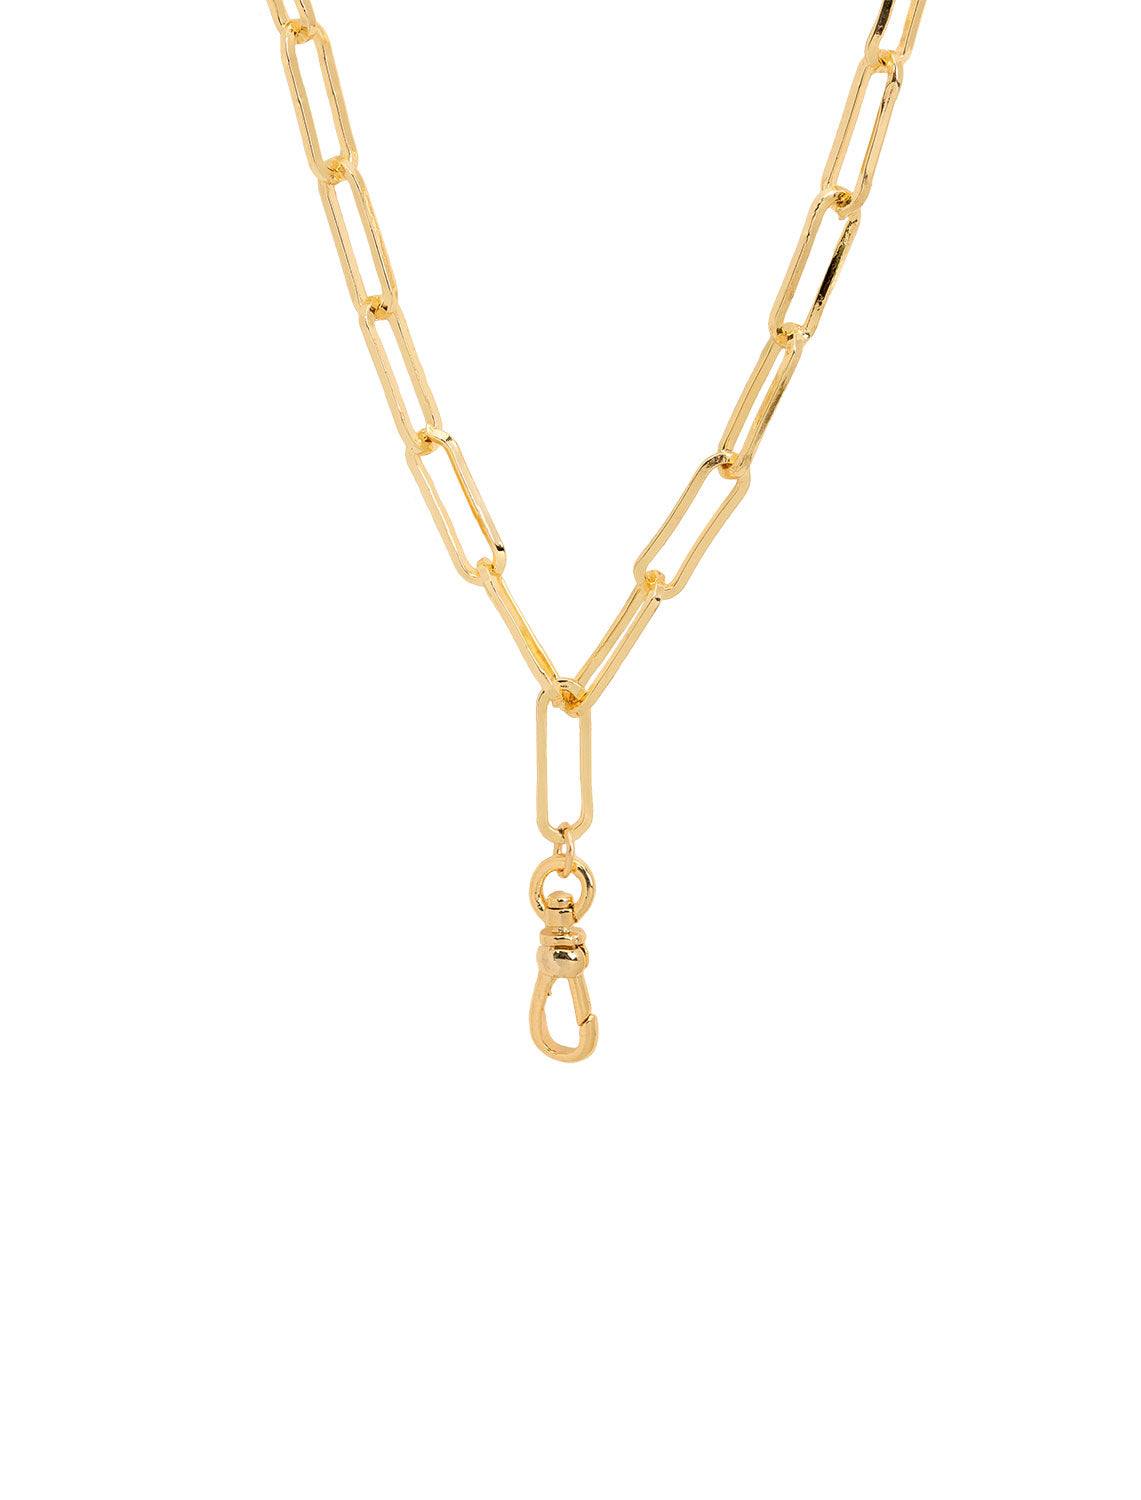 paper clip (charm) necklace - gold – Caroline Jane Jewelry